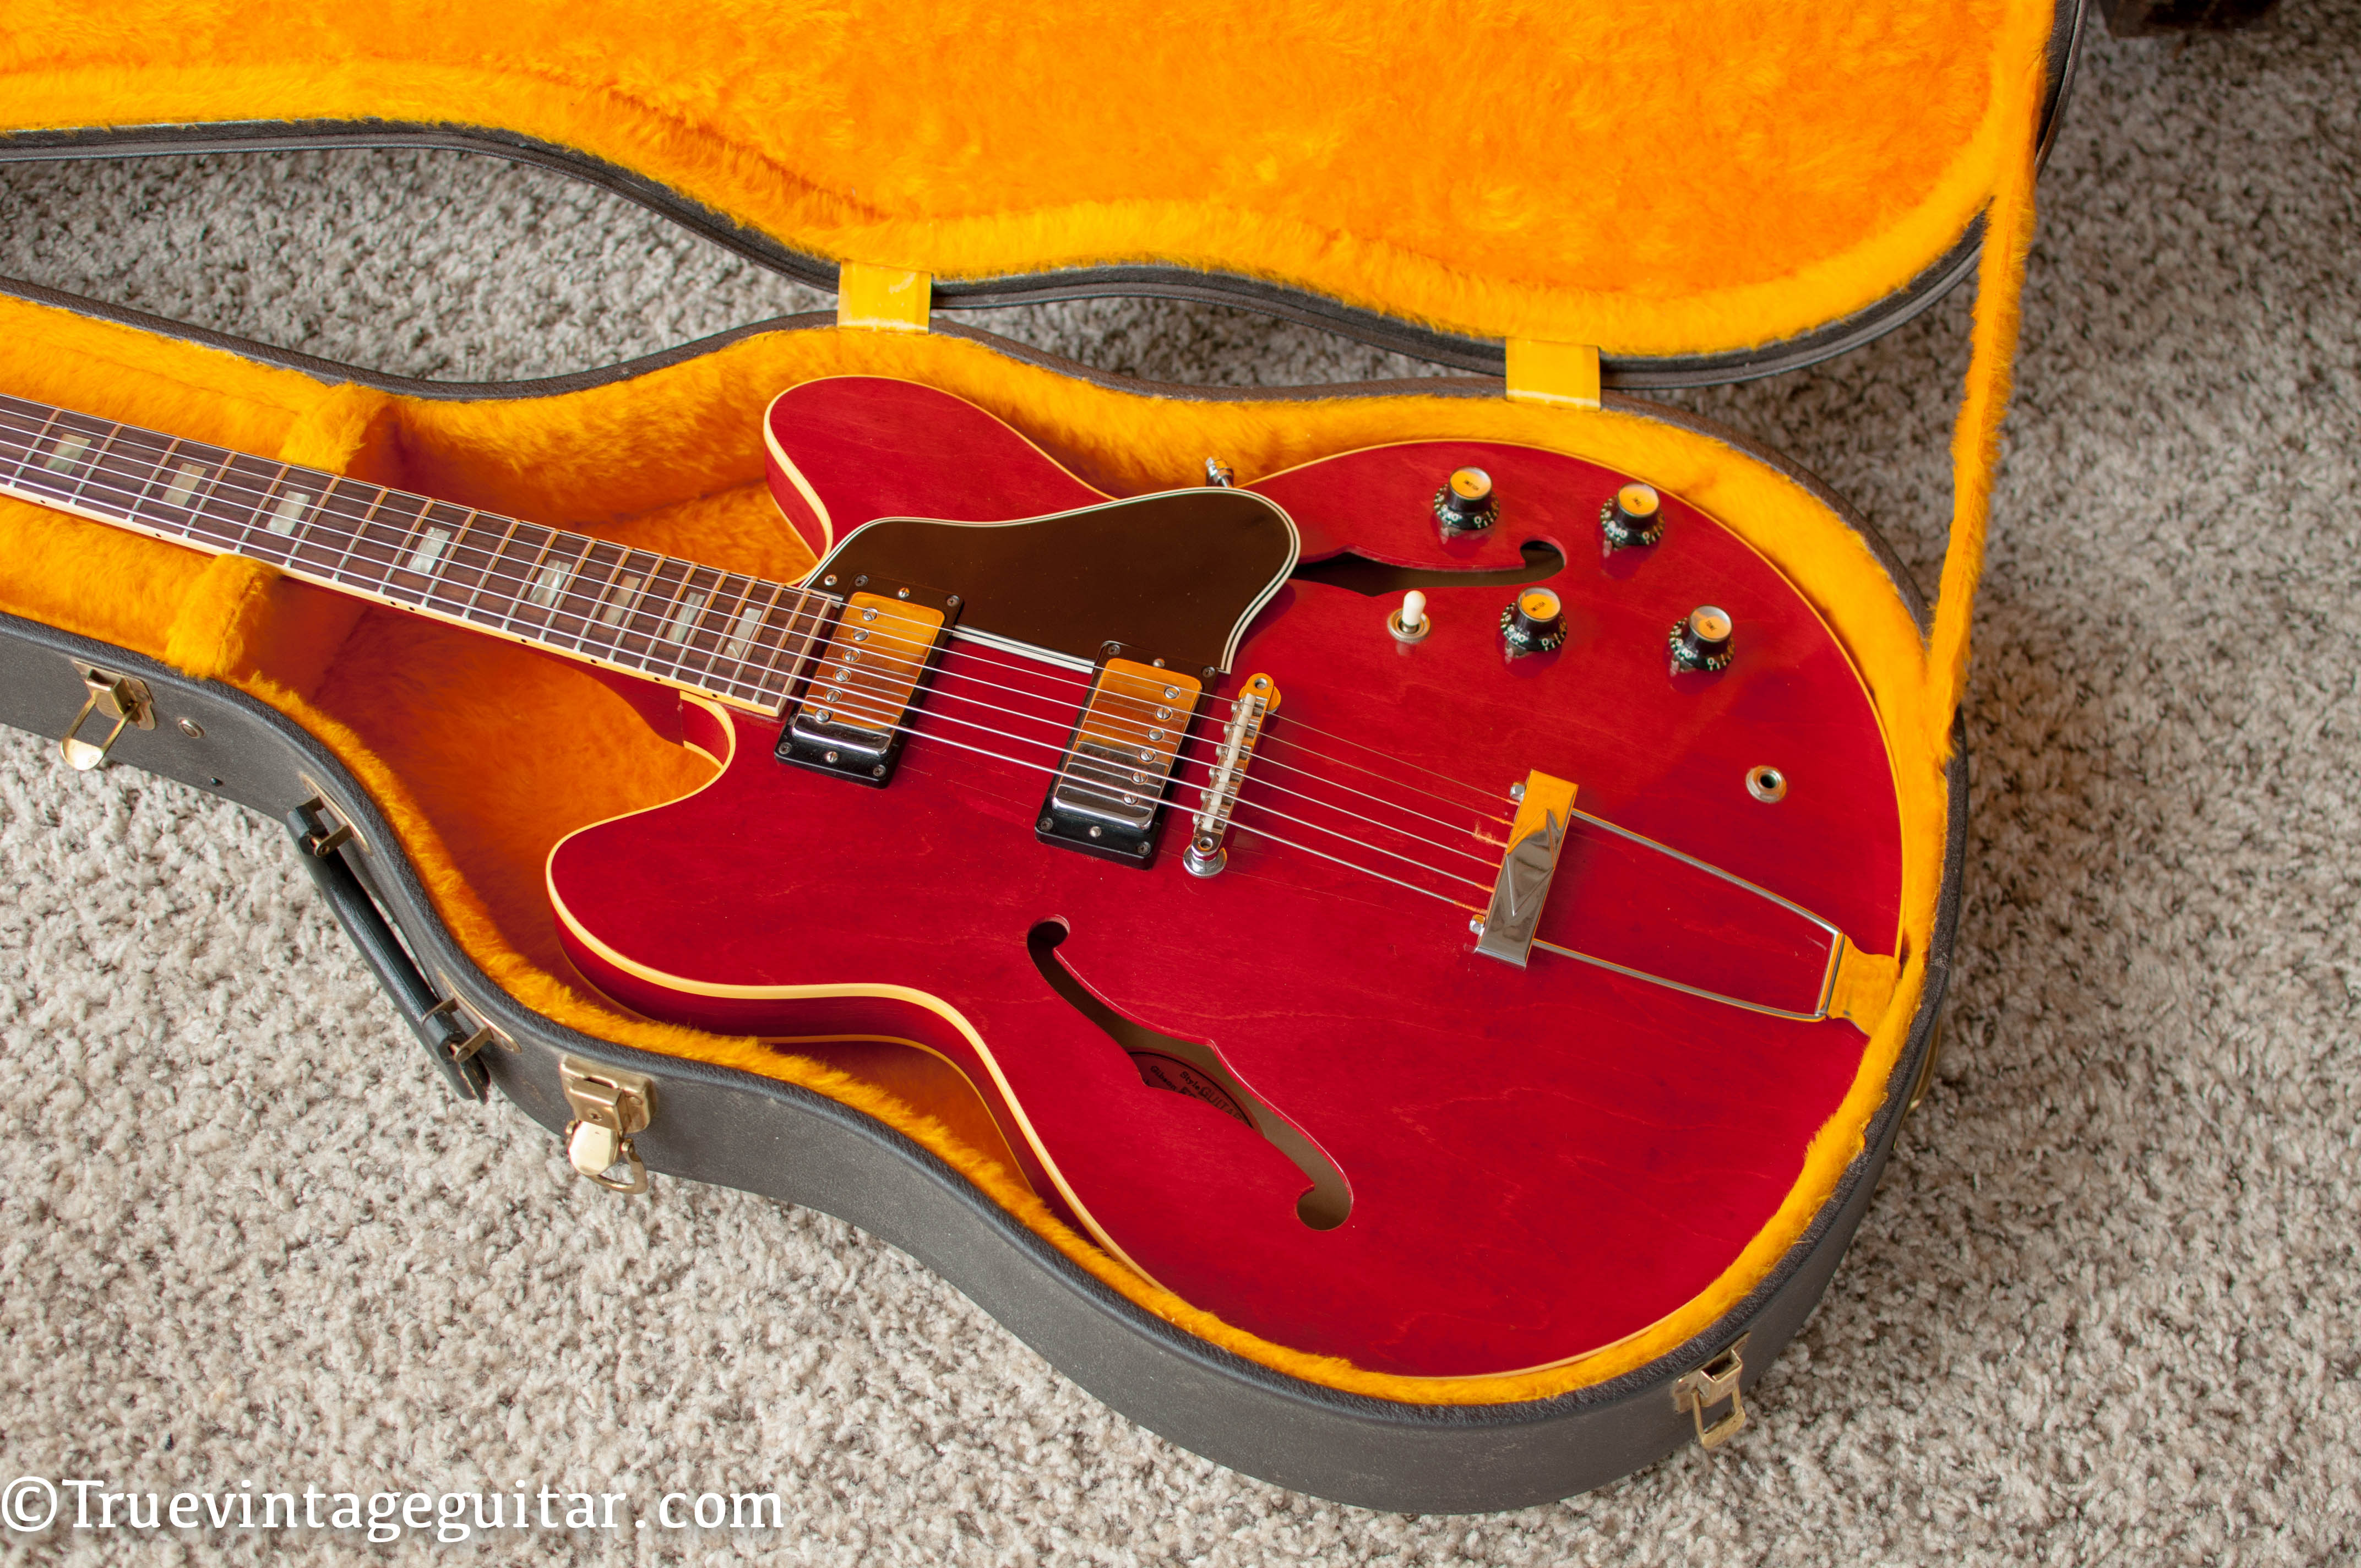 Vintage 1966 Gibson ES-335 tdc electric guitar in original Lifton case